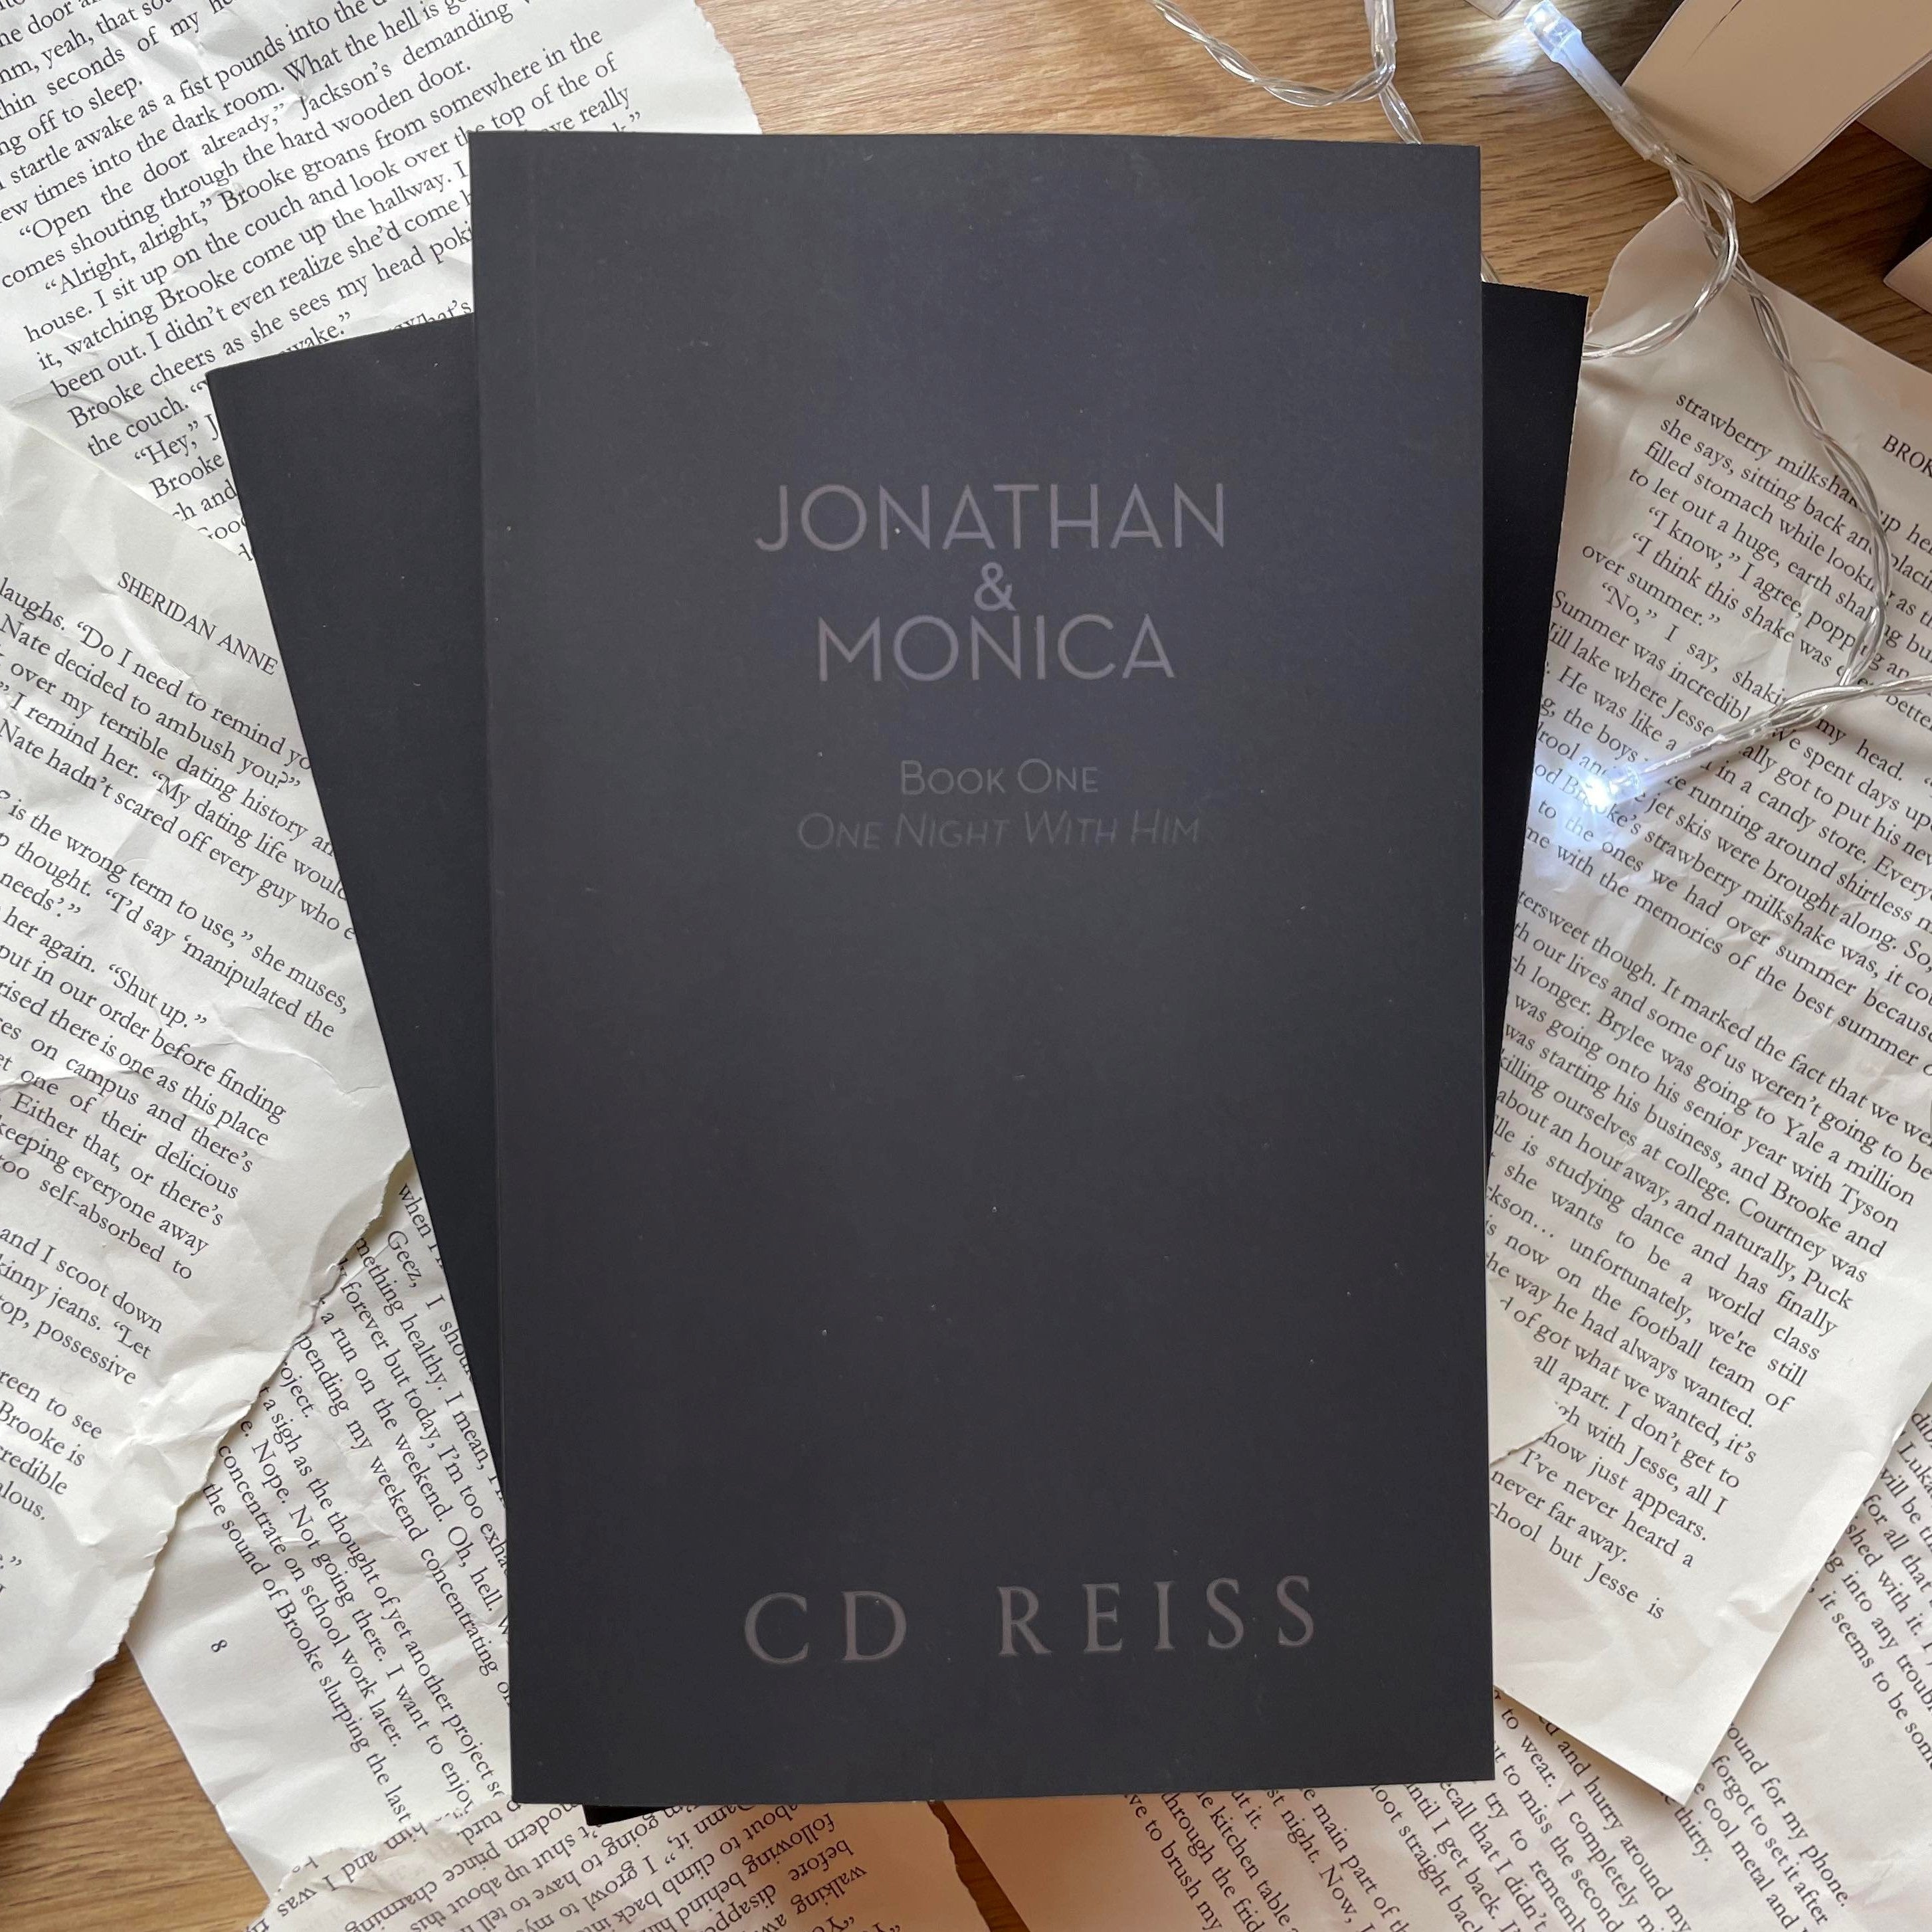 Monica & Jonathan by CD Reiss